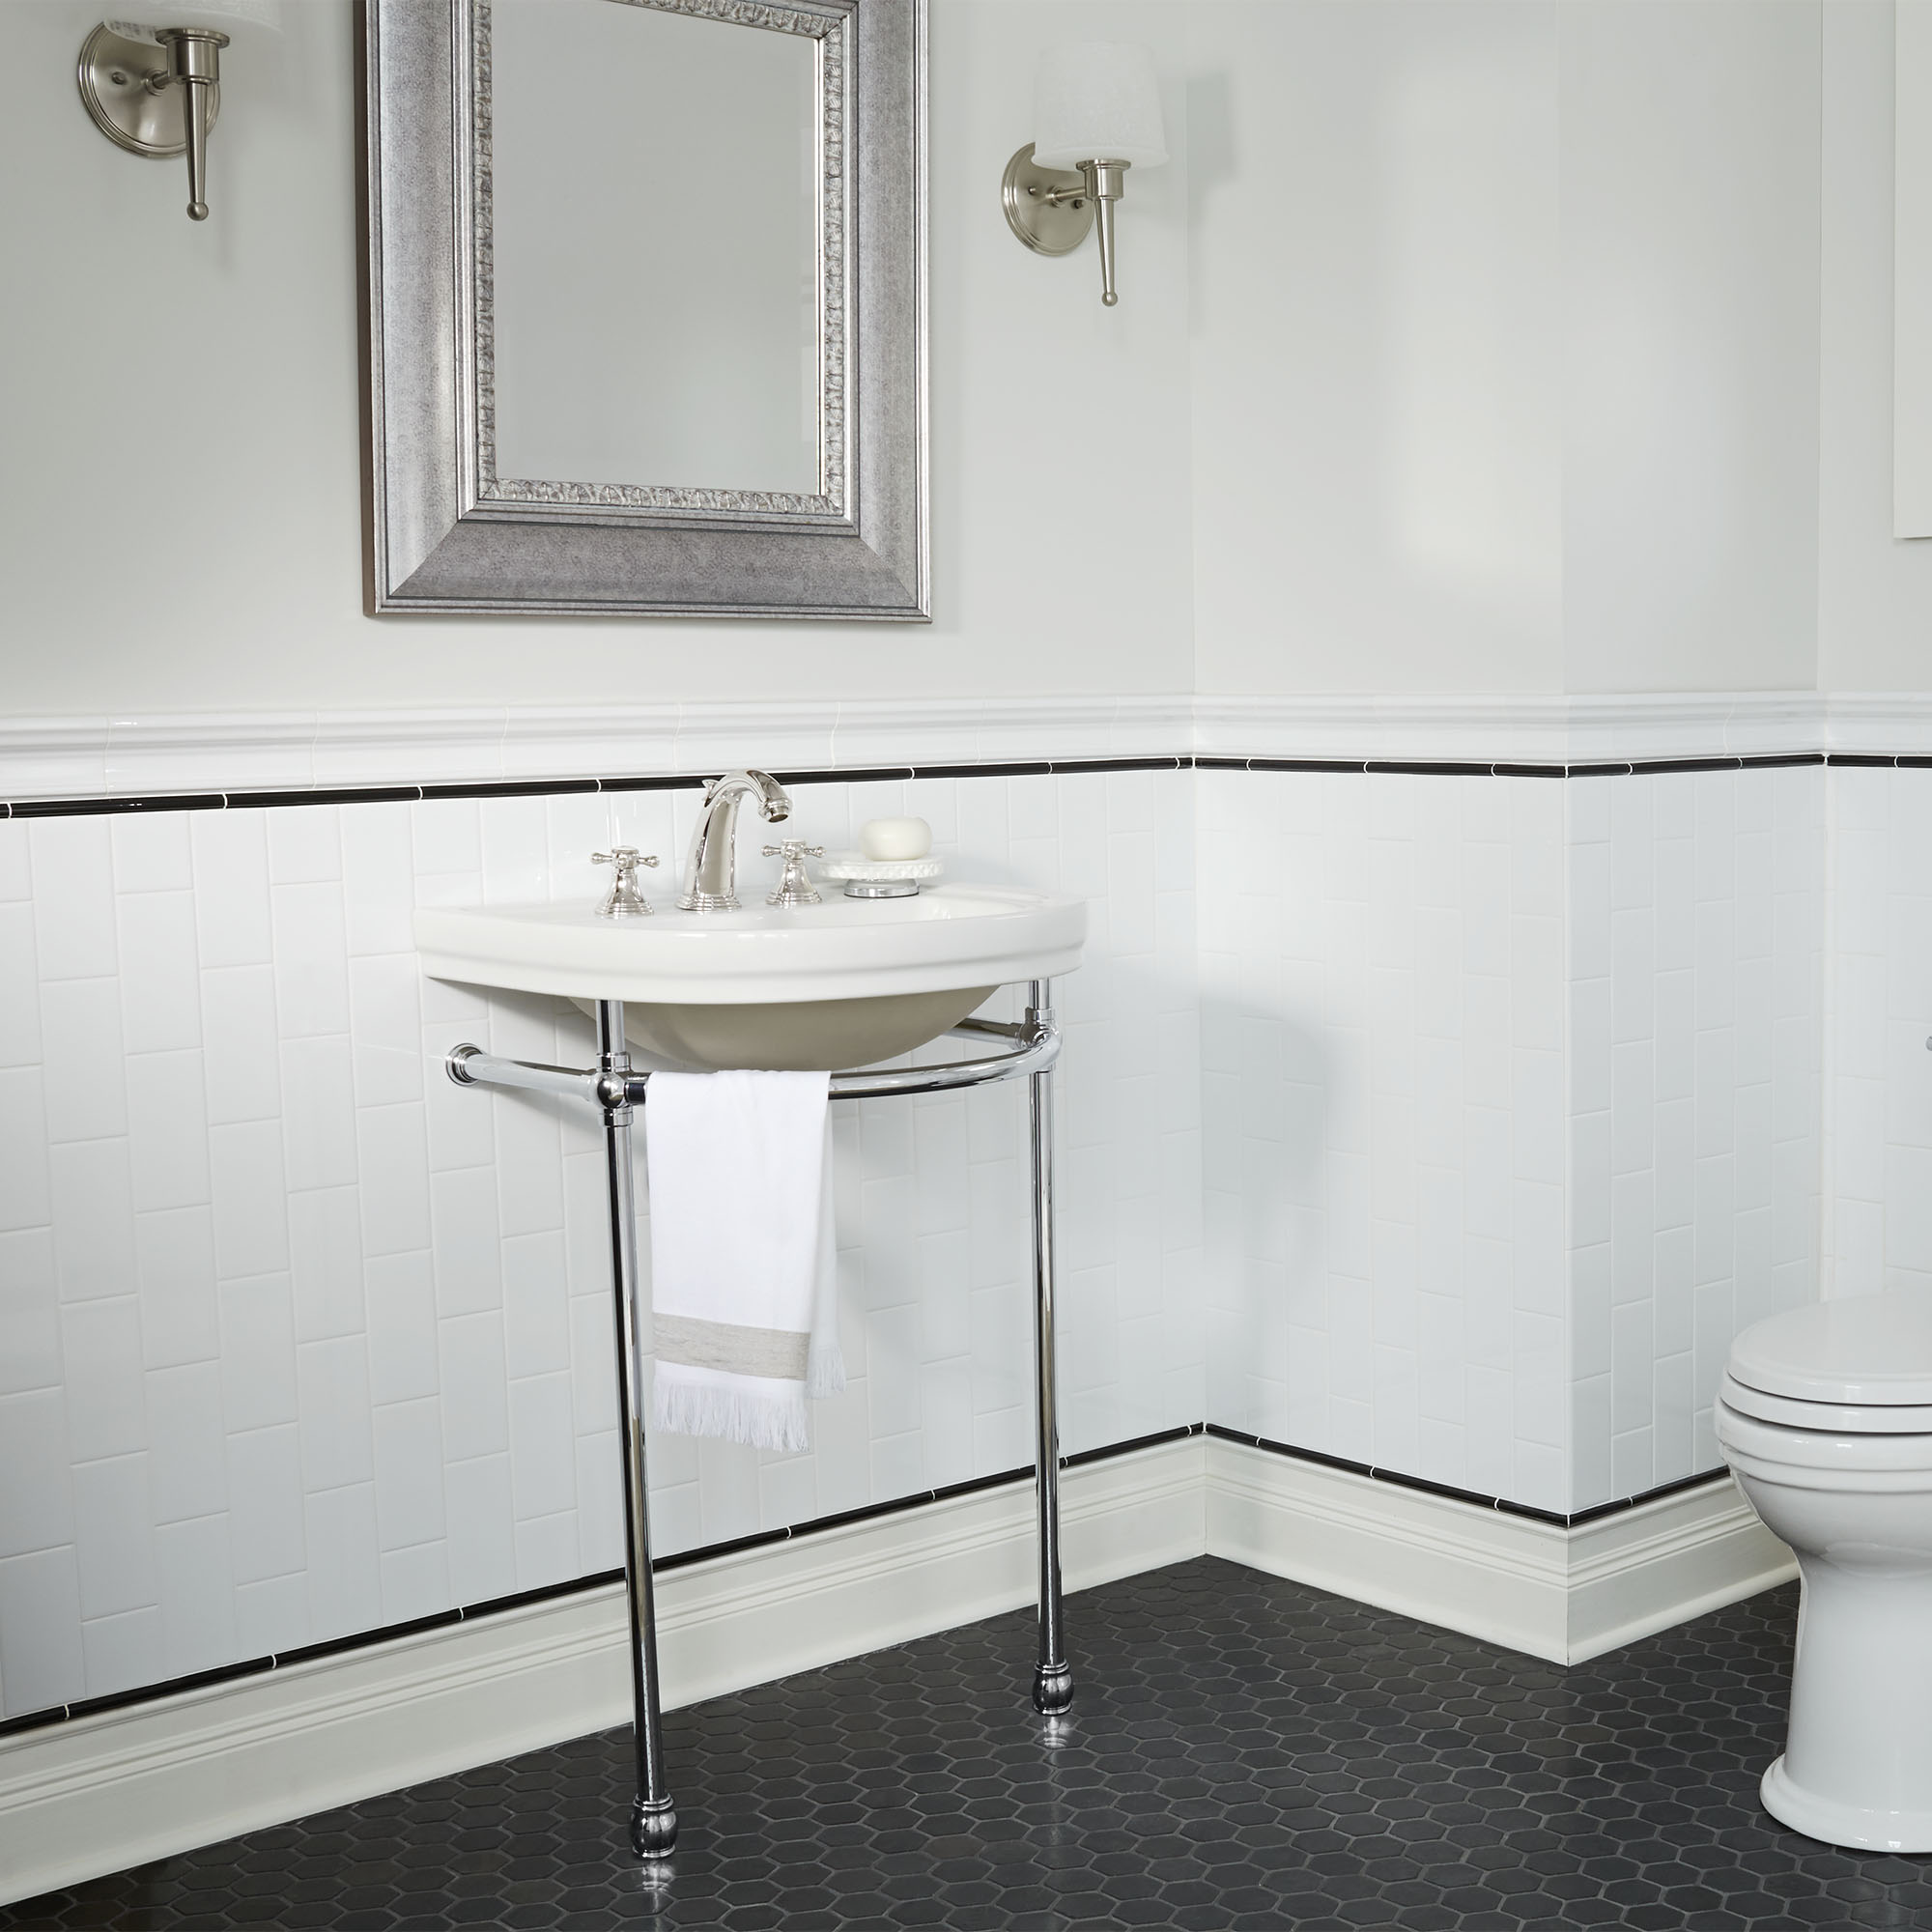 Ashbee™ 2-Handle Widespread Bathroom Faucet with Cross Handles